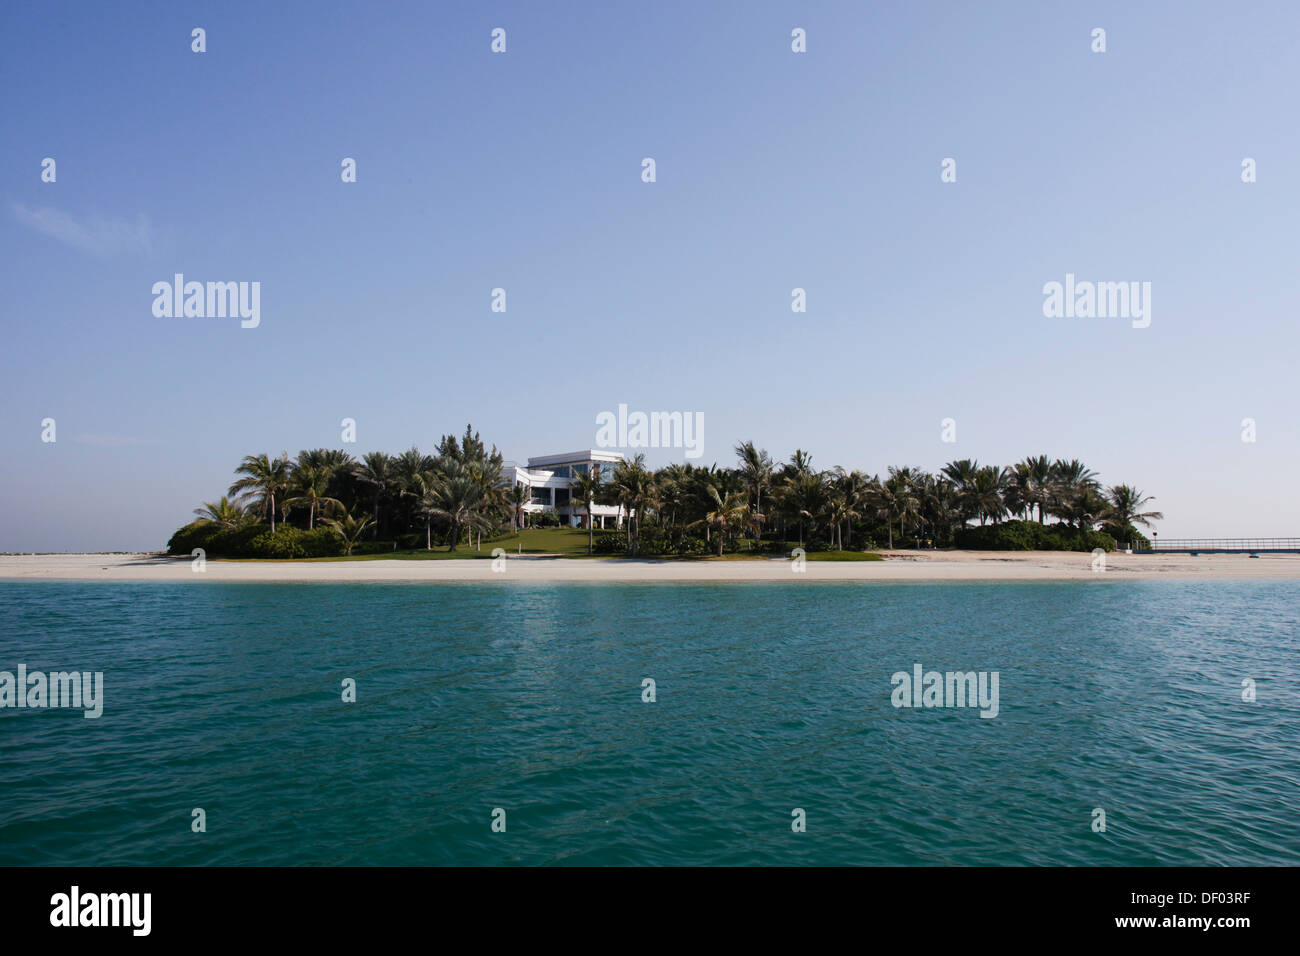 First inhabited island of the artificial archipelago 'The World' or 'World Islands', Dubai, Emirate of Dubai Stock Photo